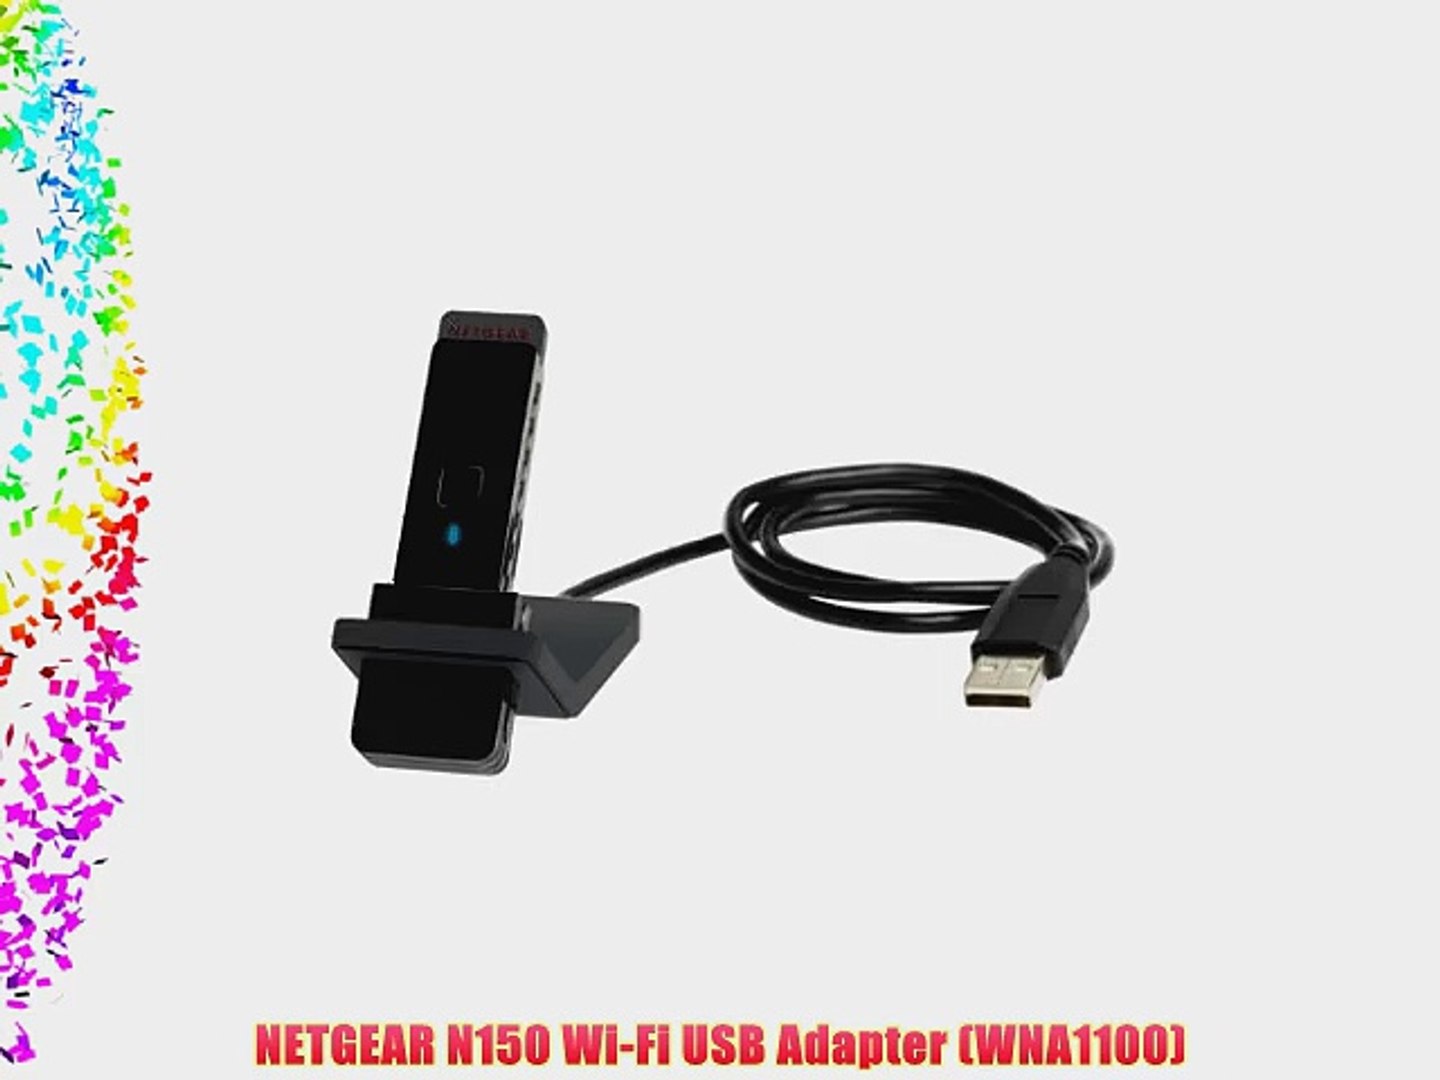 NETGEAR N150 Wi-Fi USB Adapter (WNA1100) - video Dailymotion